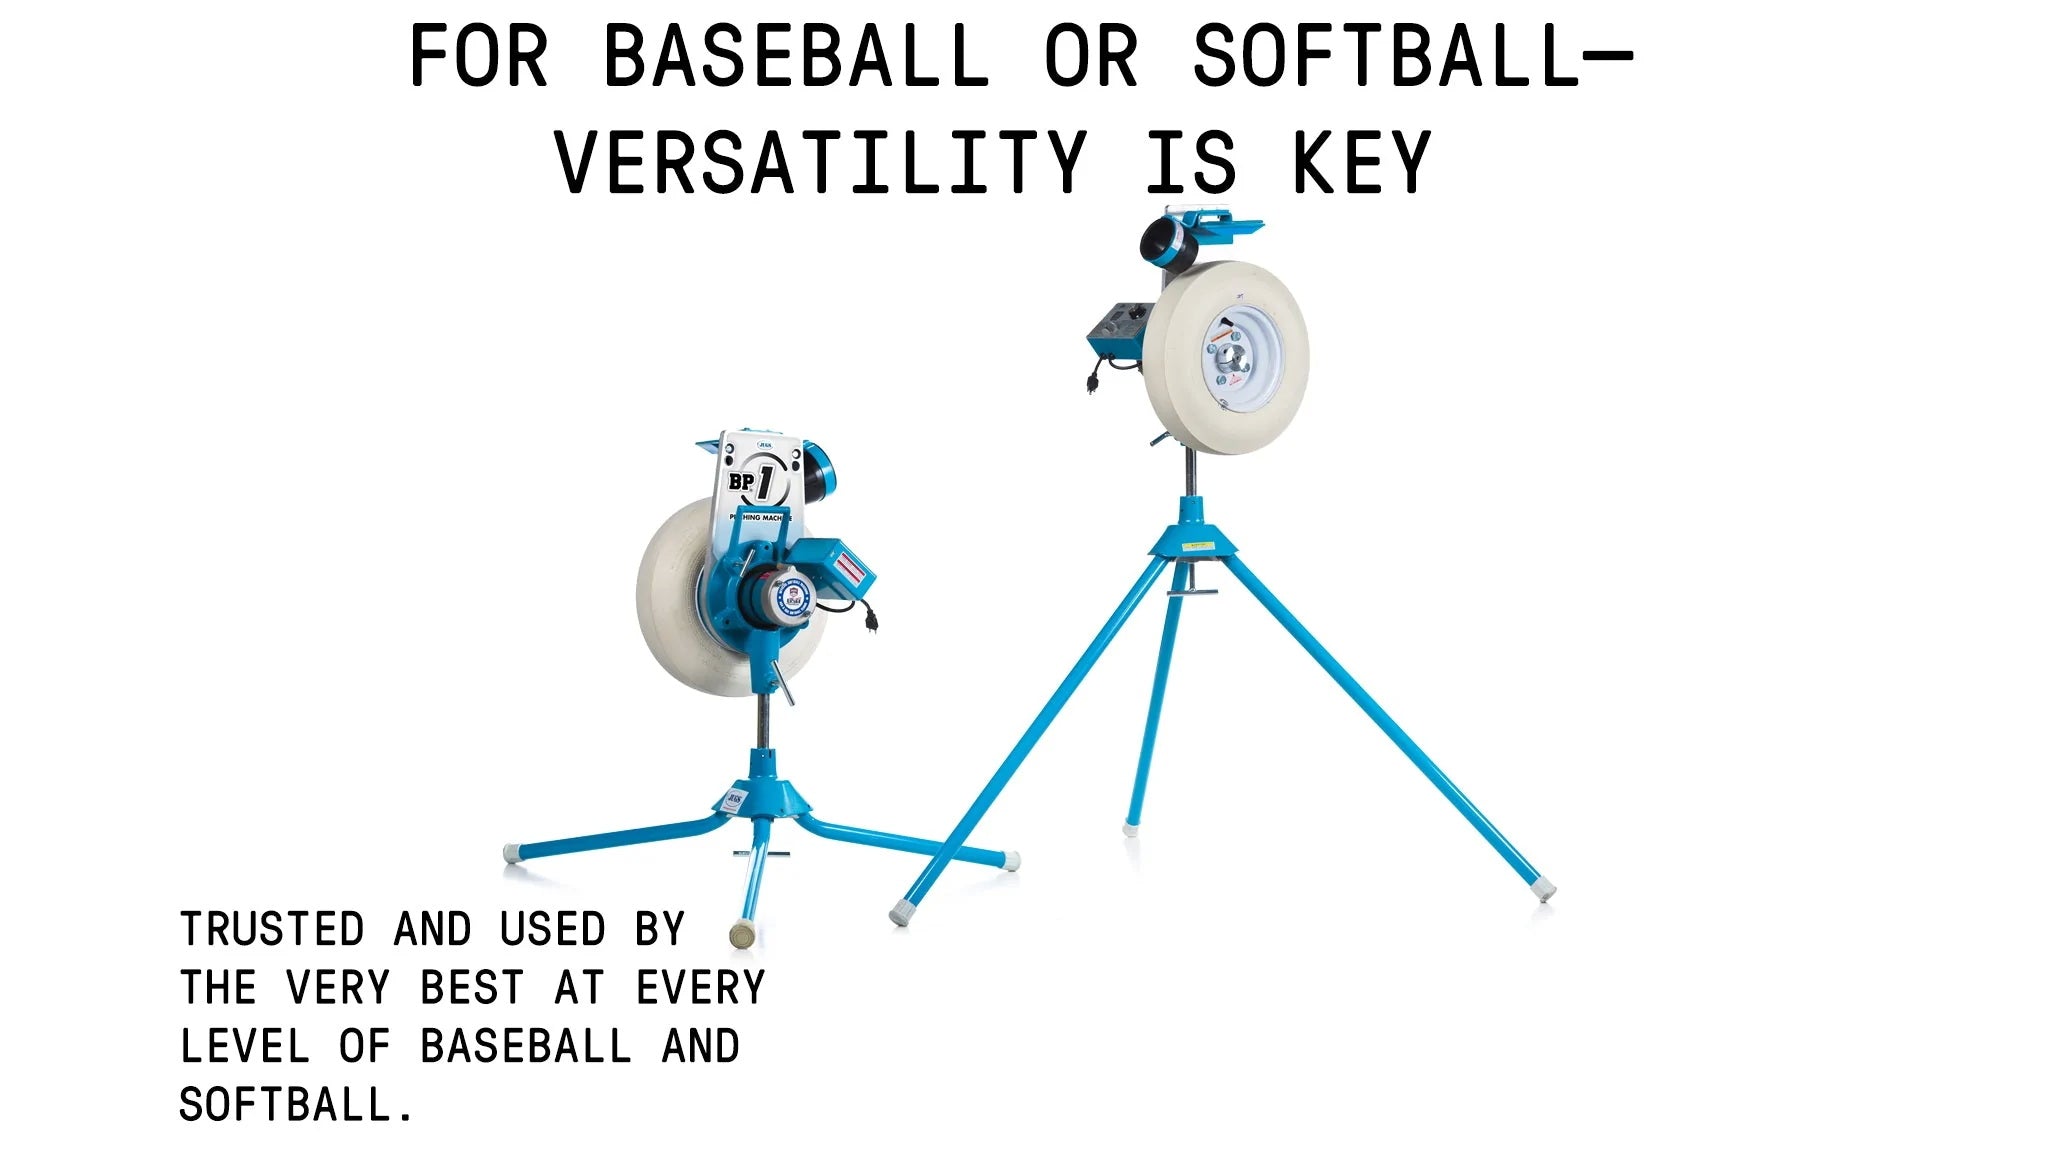 Jugs BP1 Pitching Machine for Baseball or Softball Combo Unit